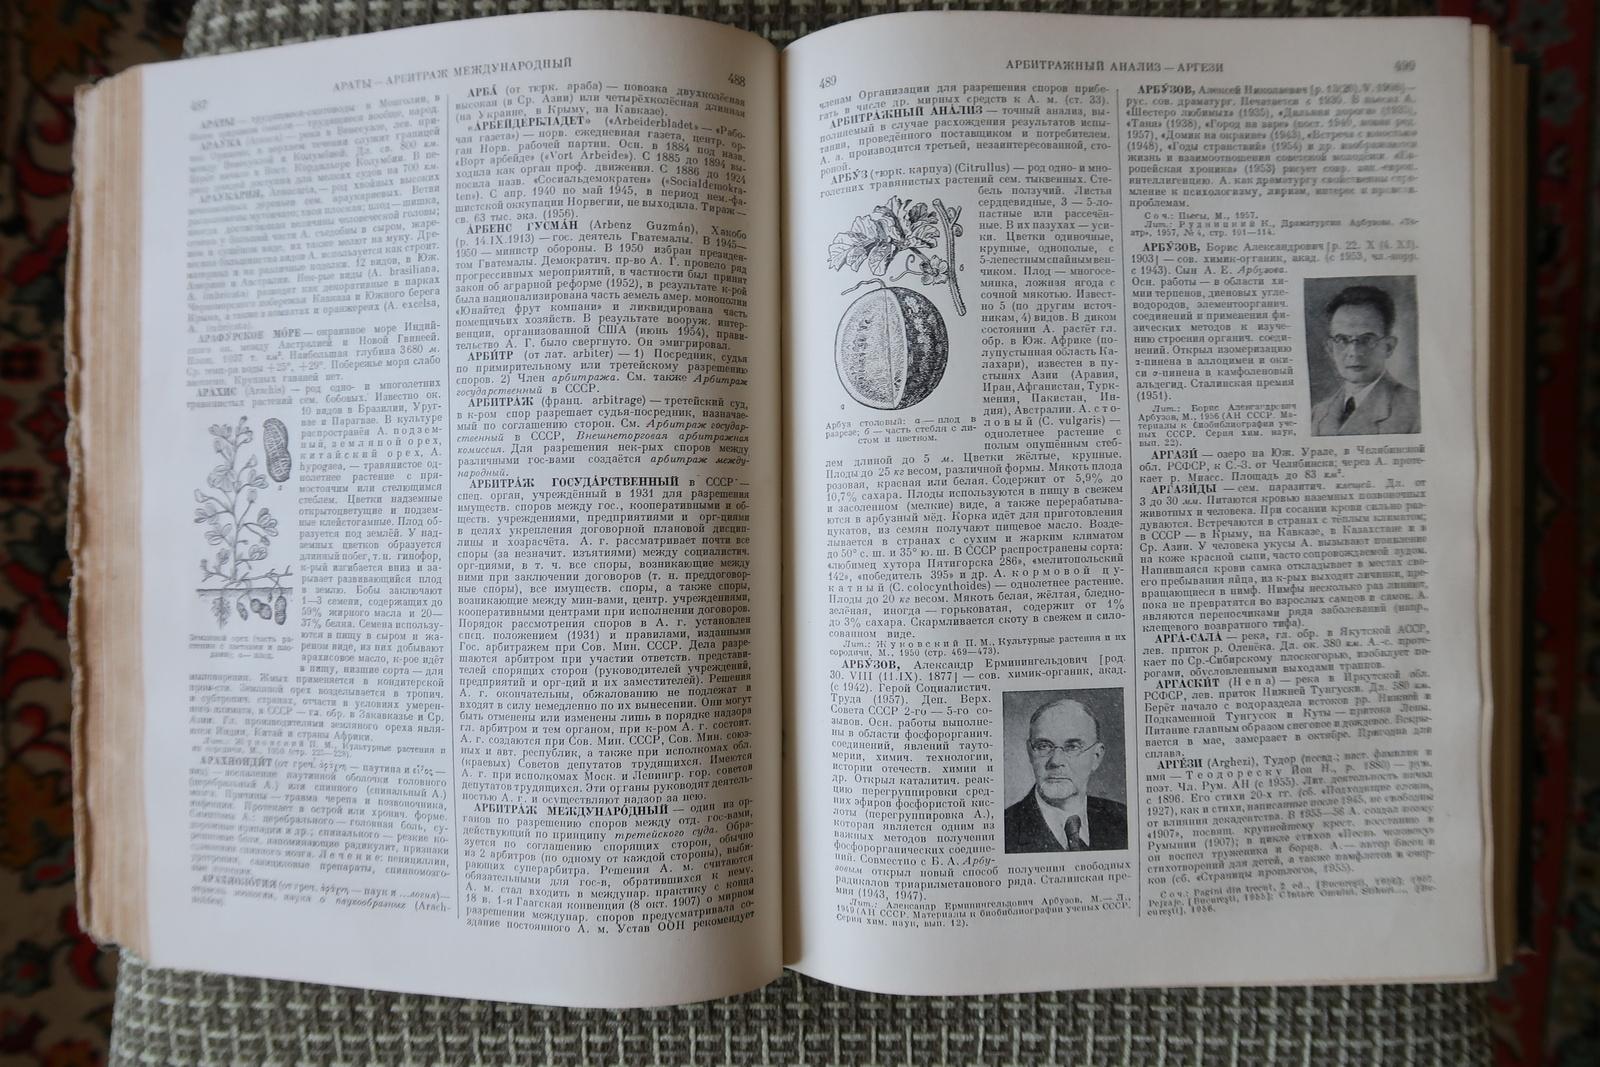 Paper Mini Soviet Encyclopedia, Volume 1: A-Bukovina - Vintage Book from USSR, 1J151 For Sale